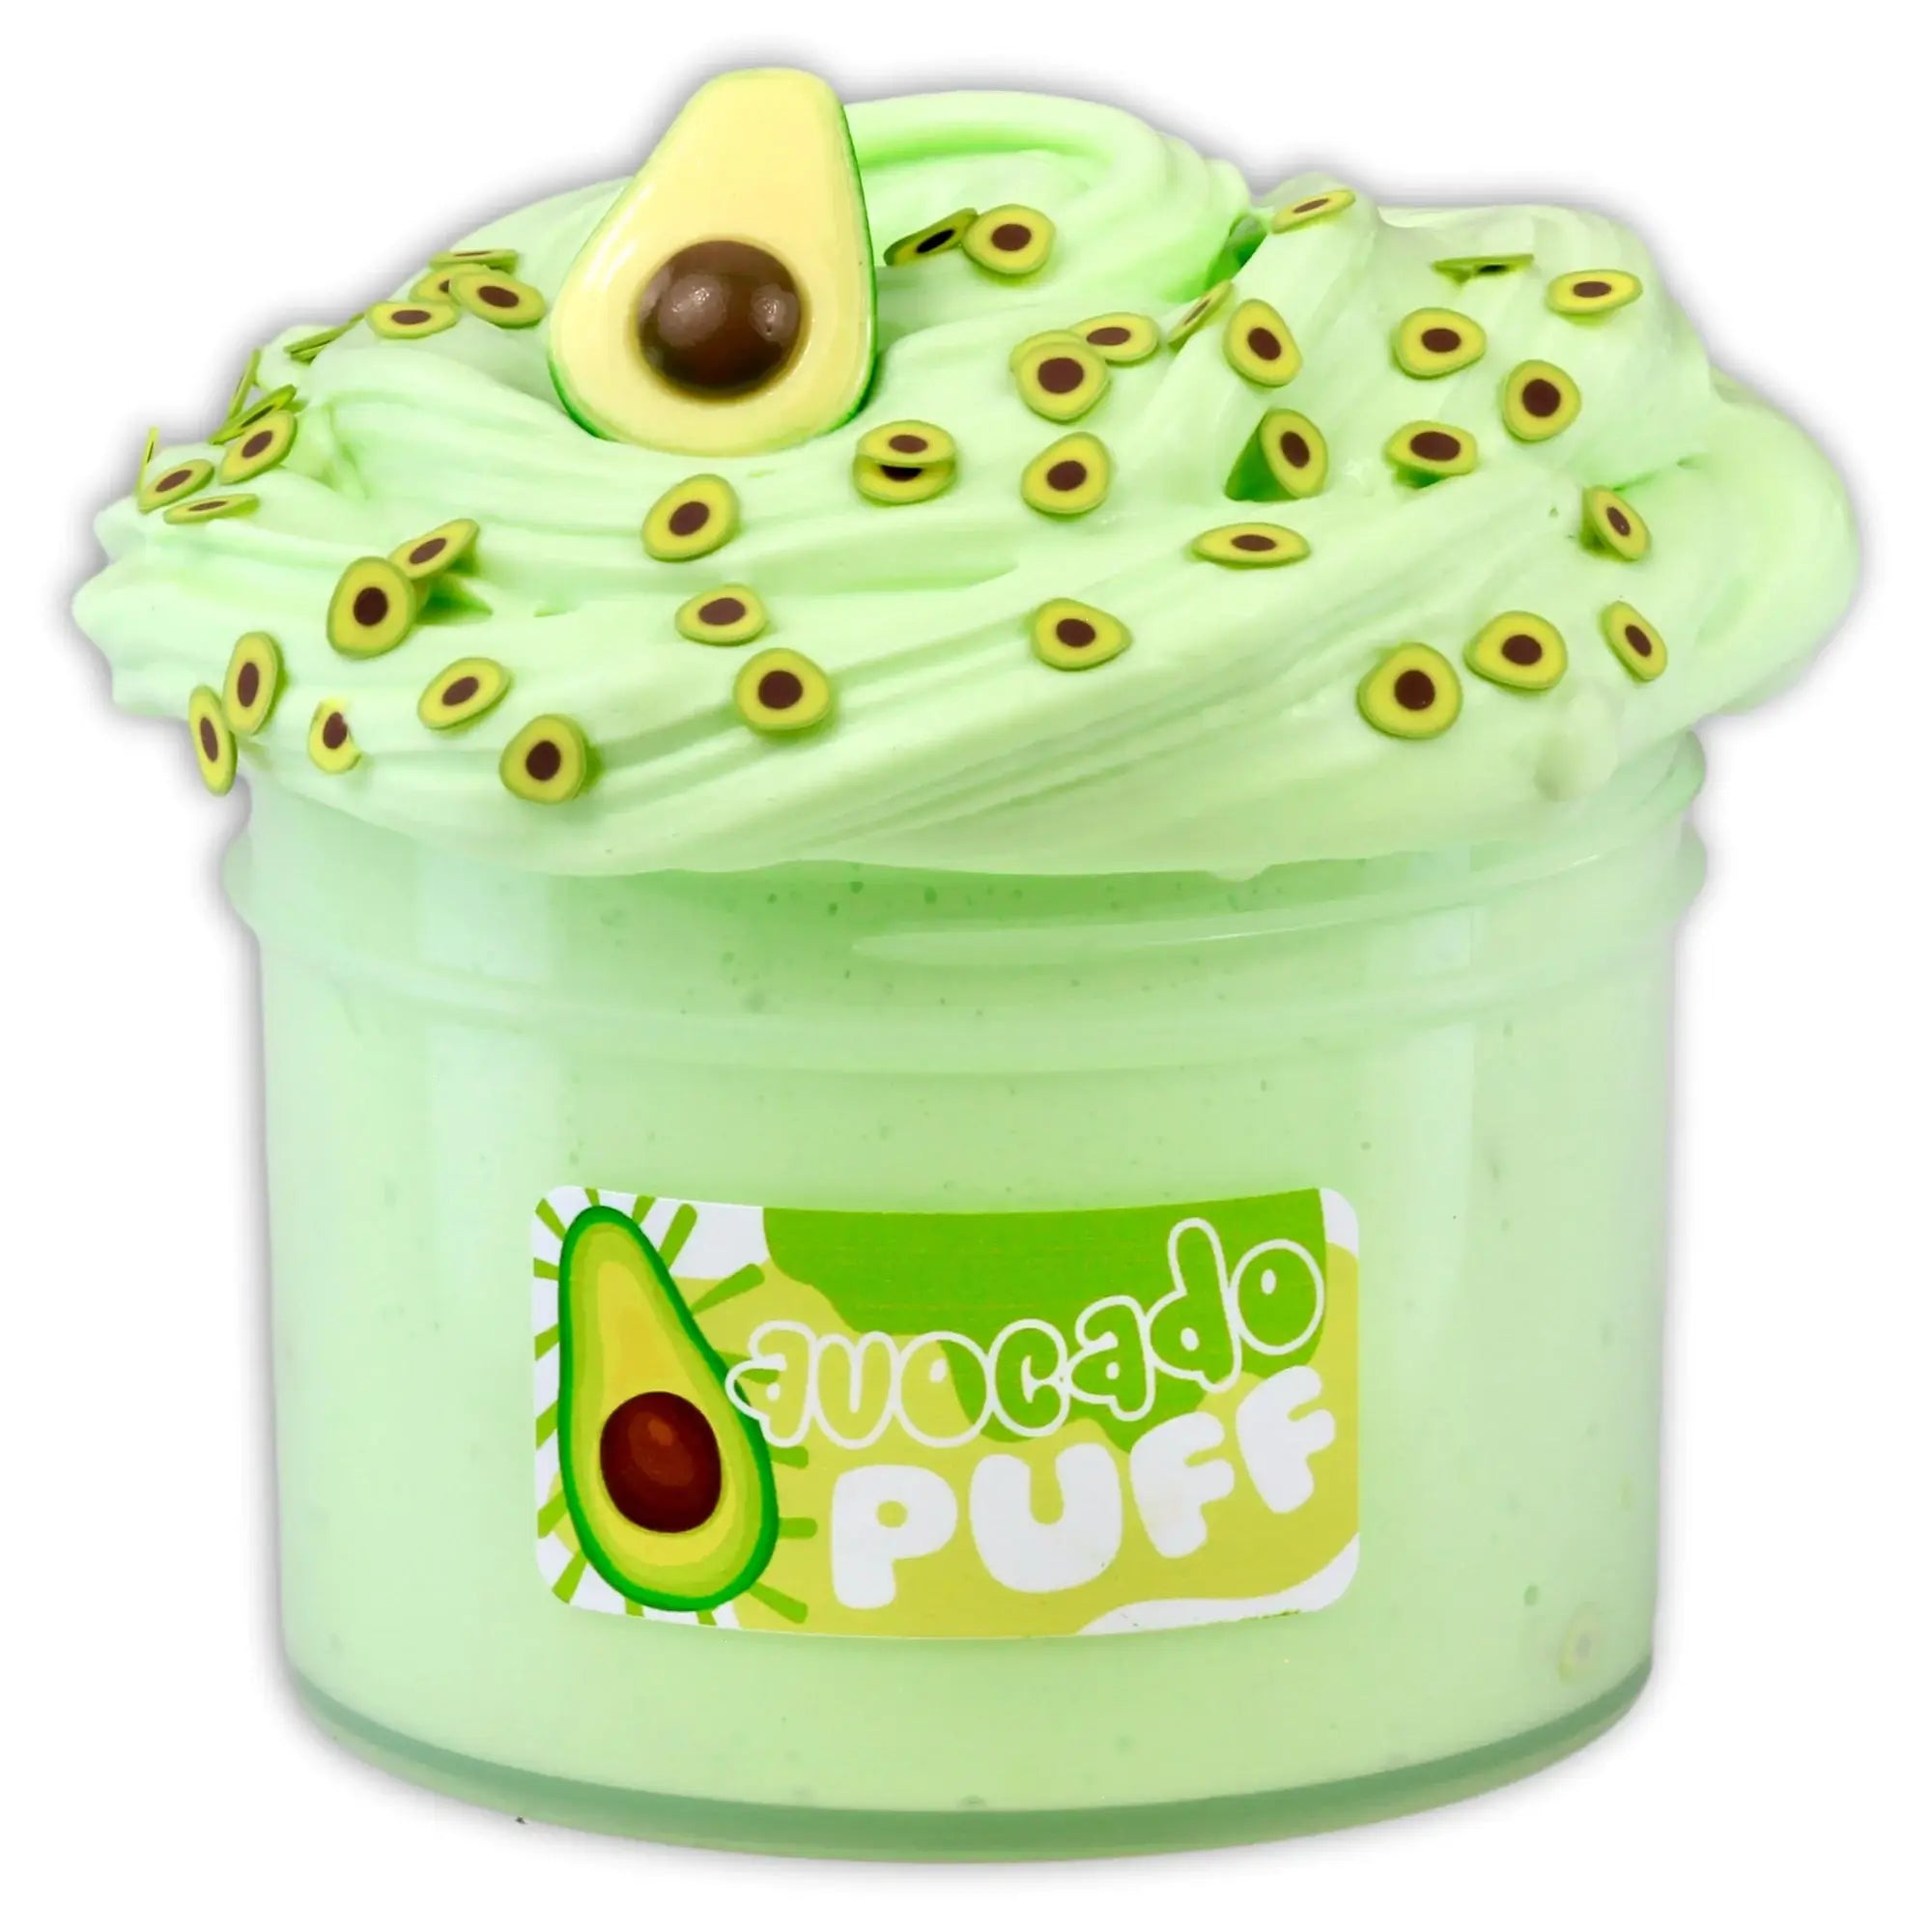 Mochi Ice-Cream DIY Slime Kit - Shop Slime - Dope Slimes